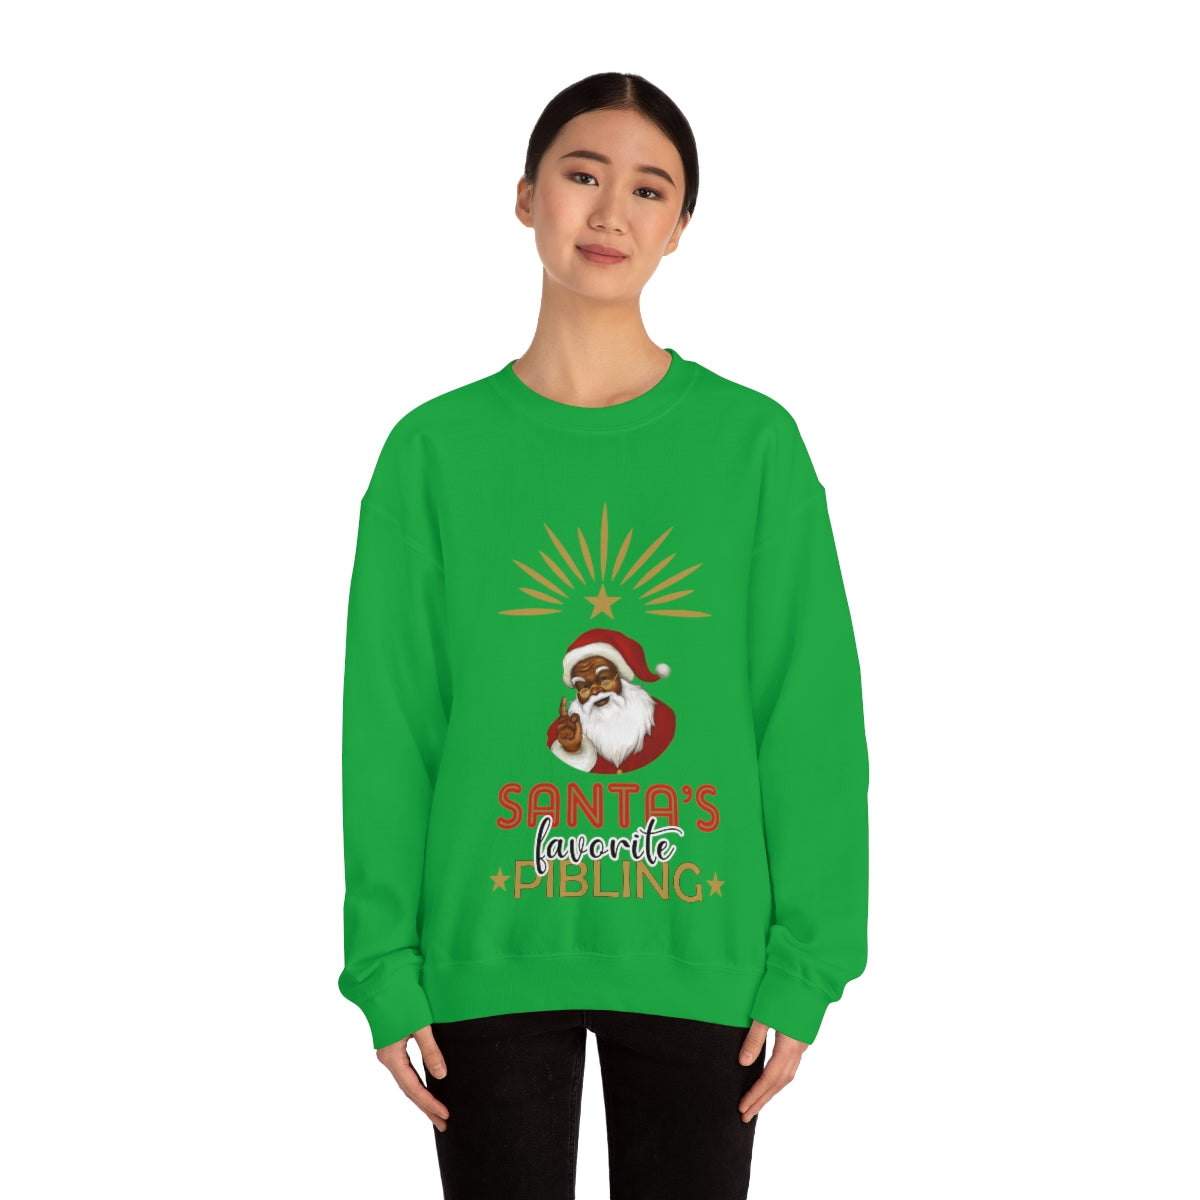 Christmas Unisex Sweatshirts , Sweatshirt , Women Sweatshirt , Men Sweatshirt ,Crewneck Sweatshirt, SANTA’S FAVORITE Pibling Printify